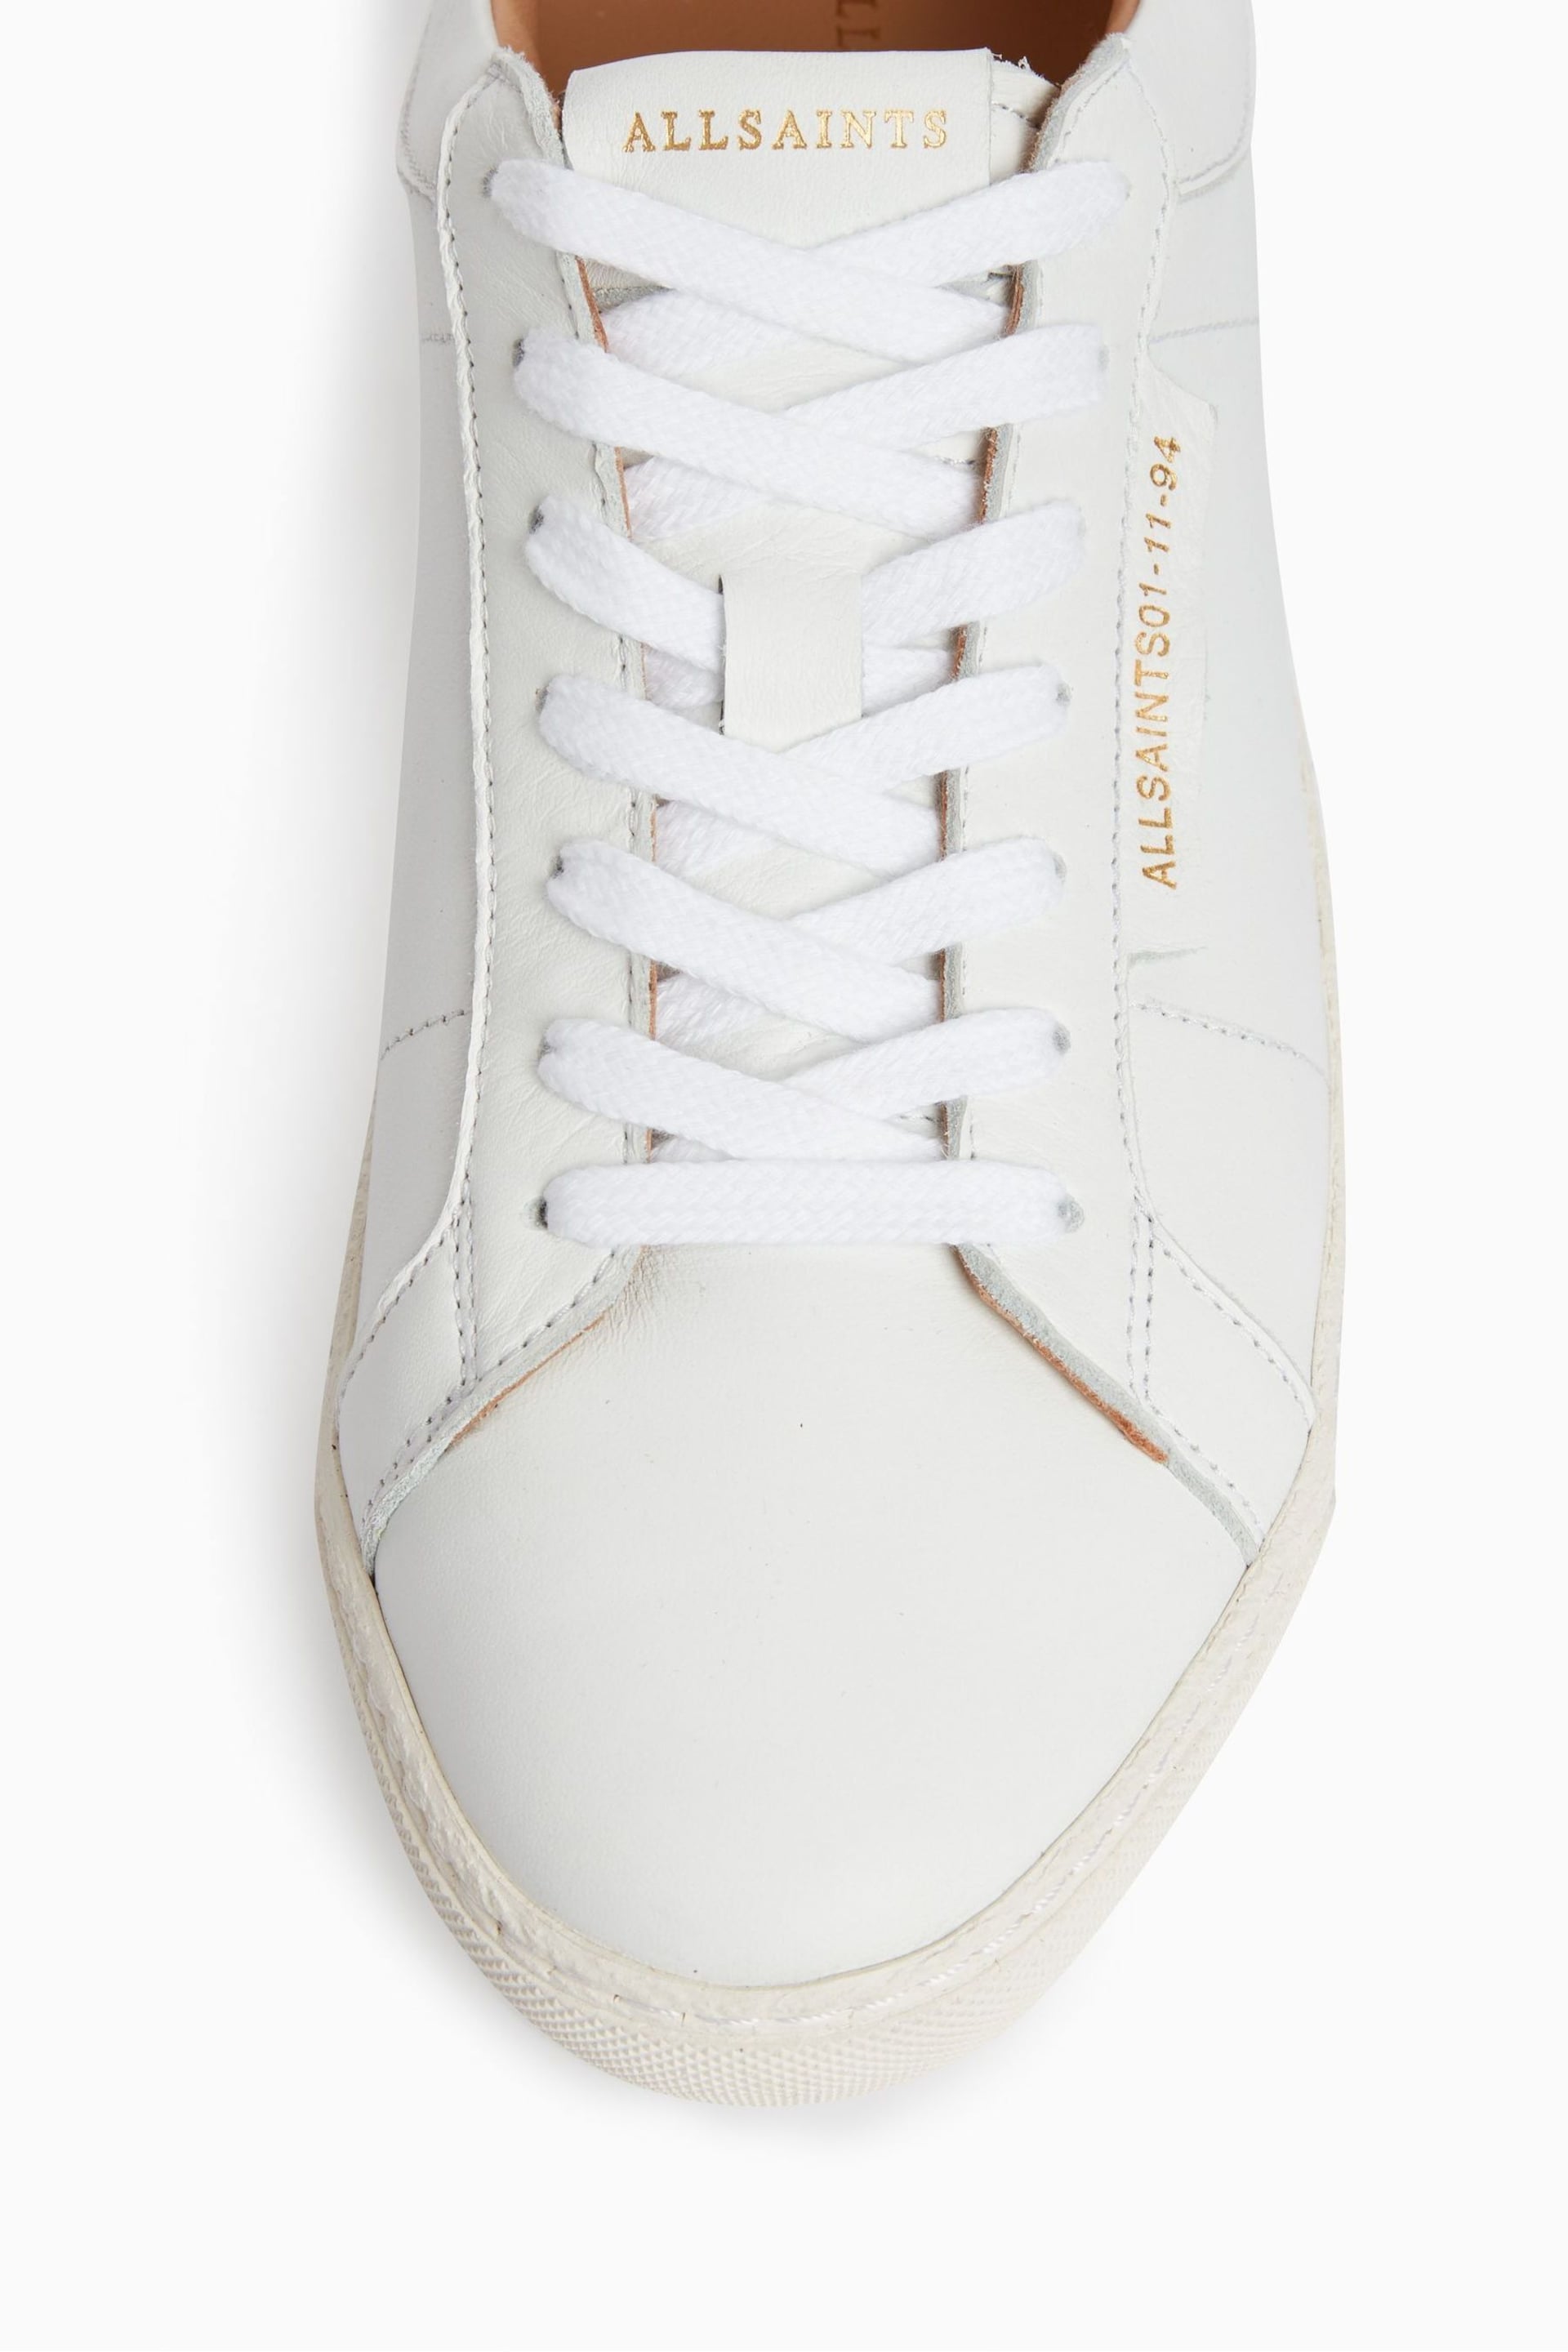 AllSaints White Sheer Sneakers - Image 4 of 7